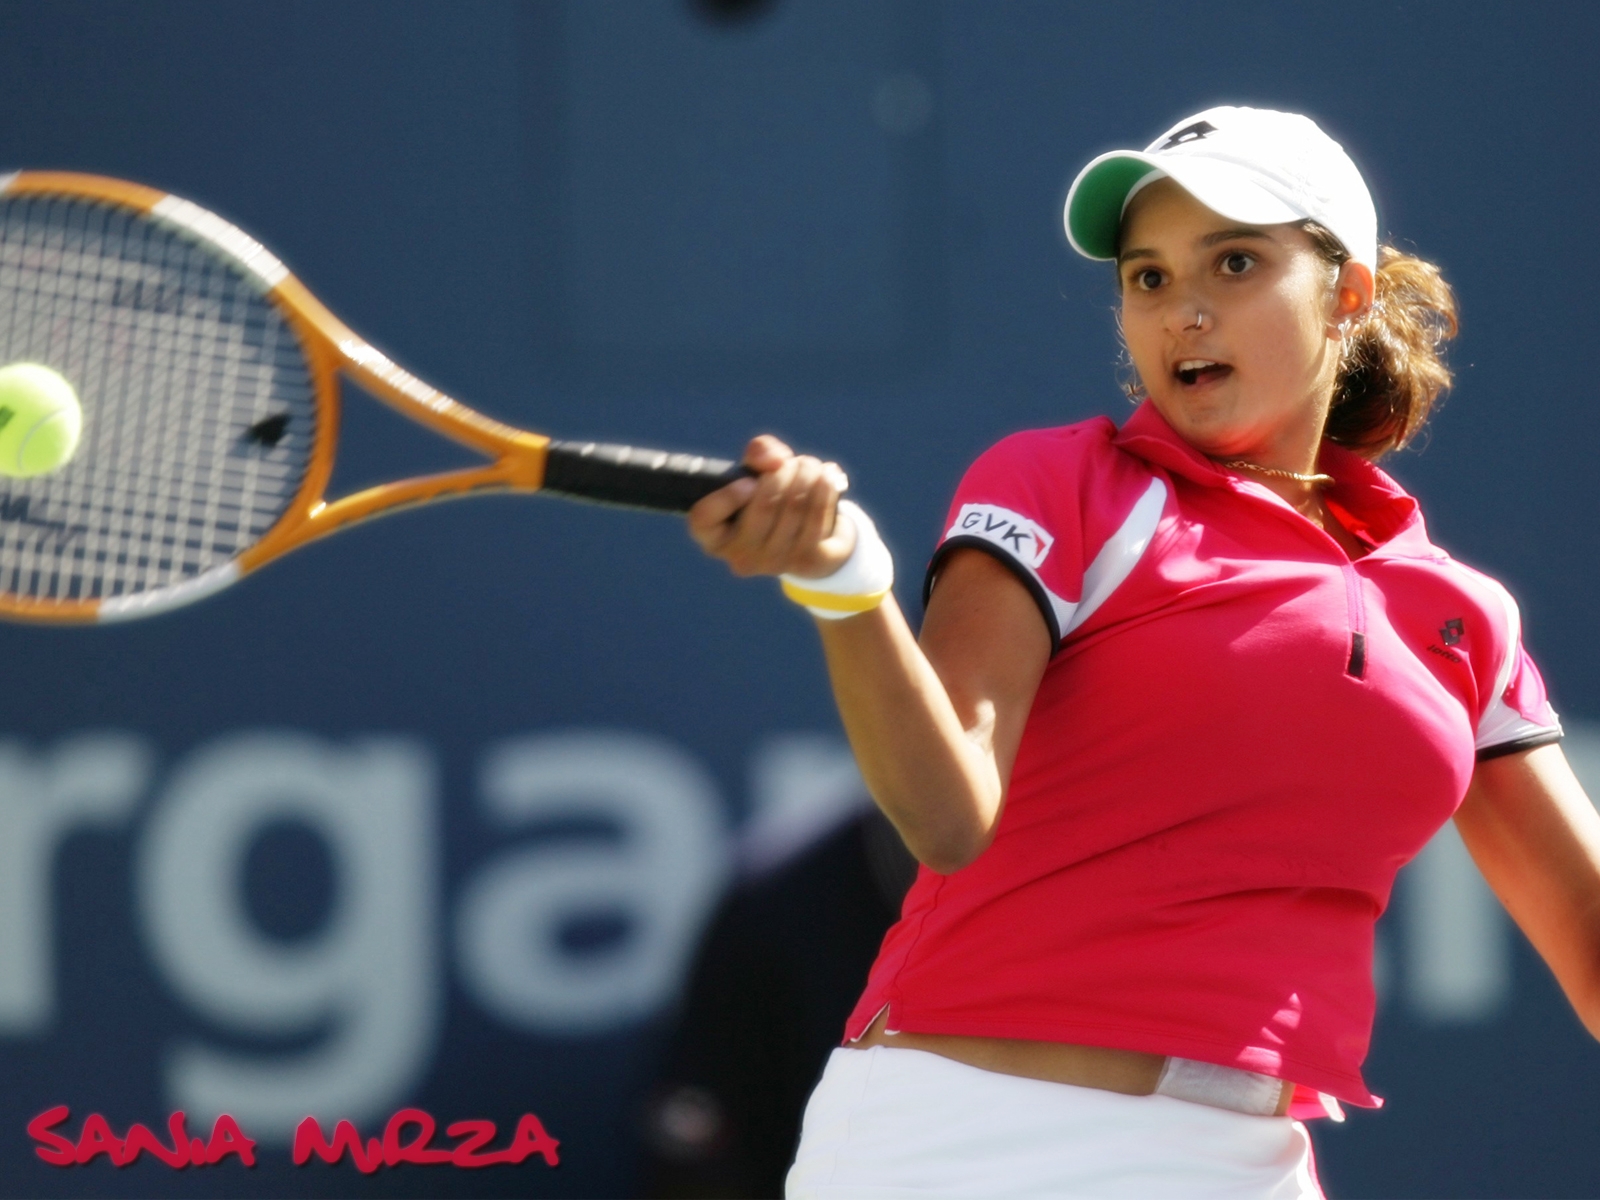 Long Tennis: Sania mirza tennis